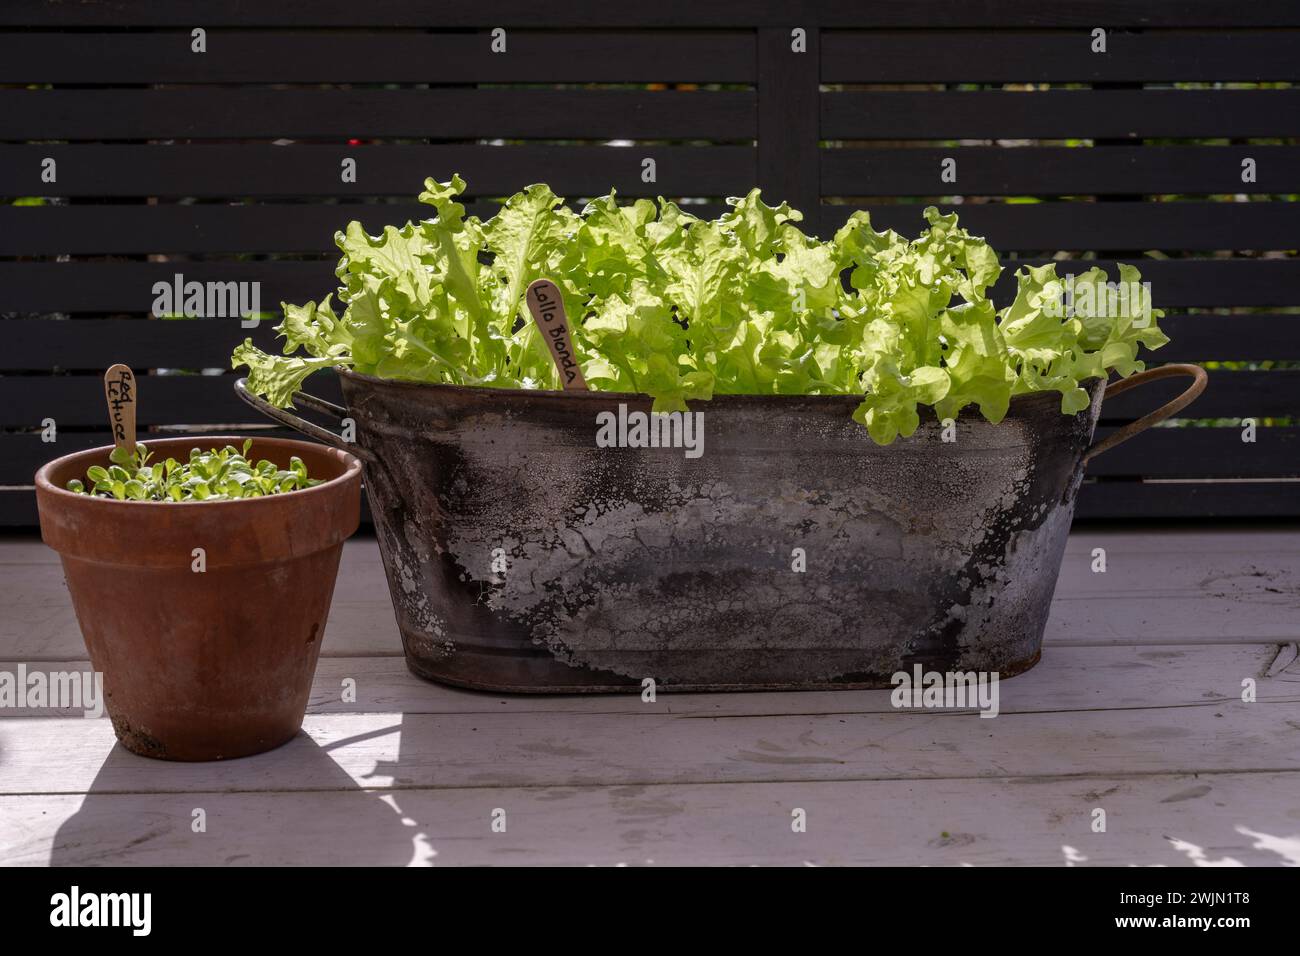 Lollo Bionda lettuce growing in a metal container alongside a terracotta pot of lettuce seedlings Stock Photo